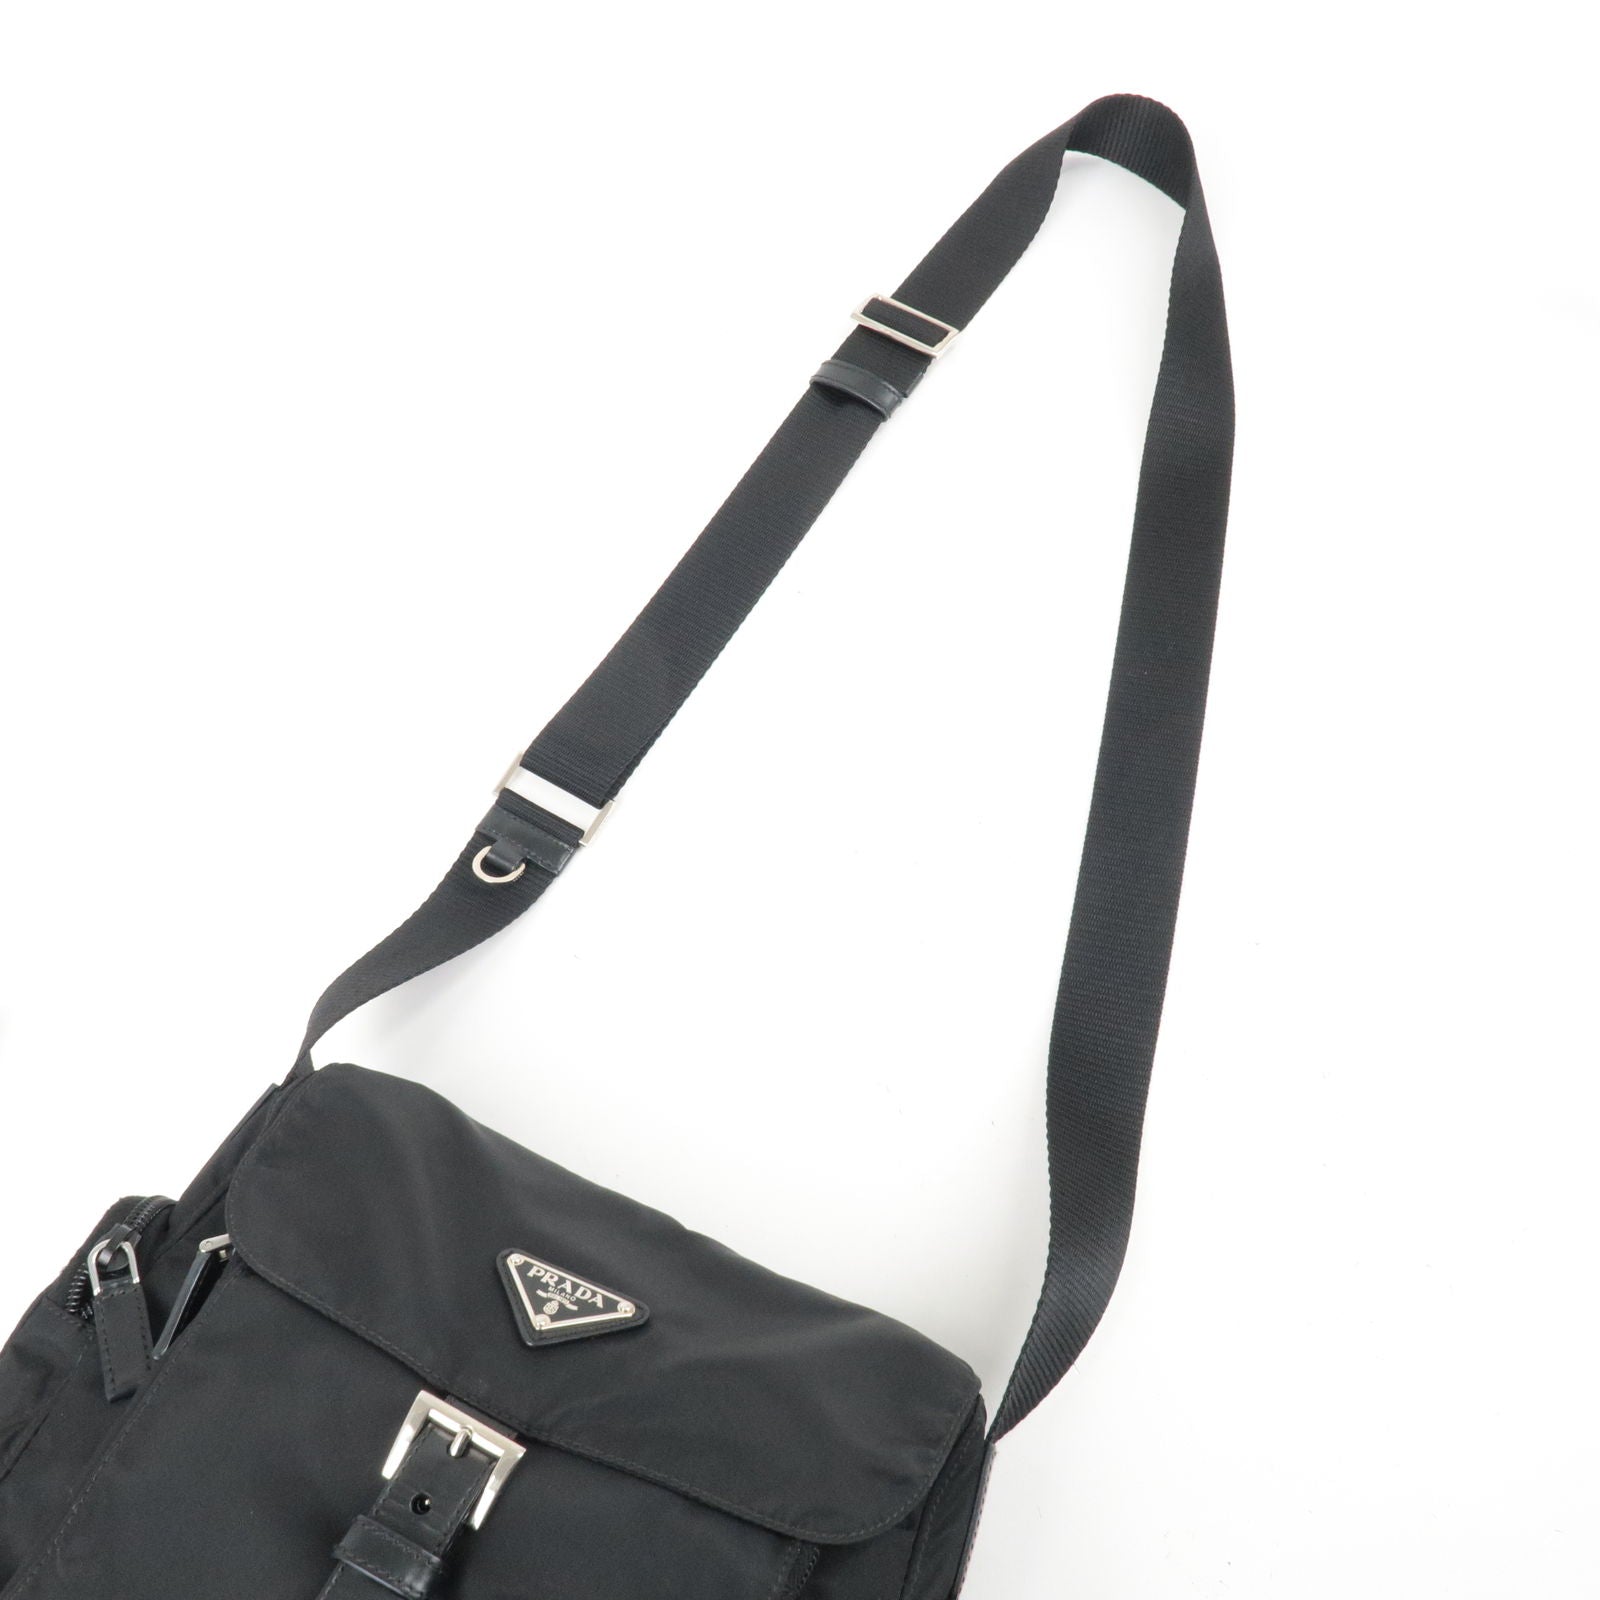 Prada Black Tessuto Nylon and Leather Crossbody Bag